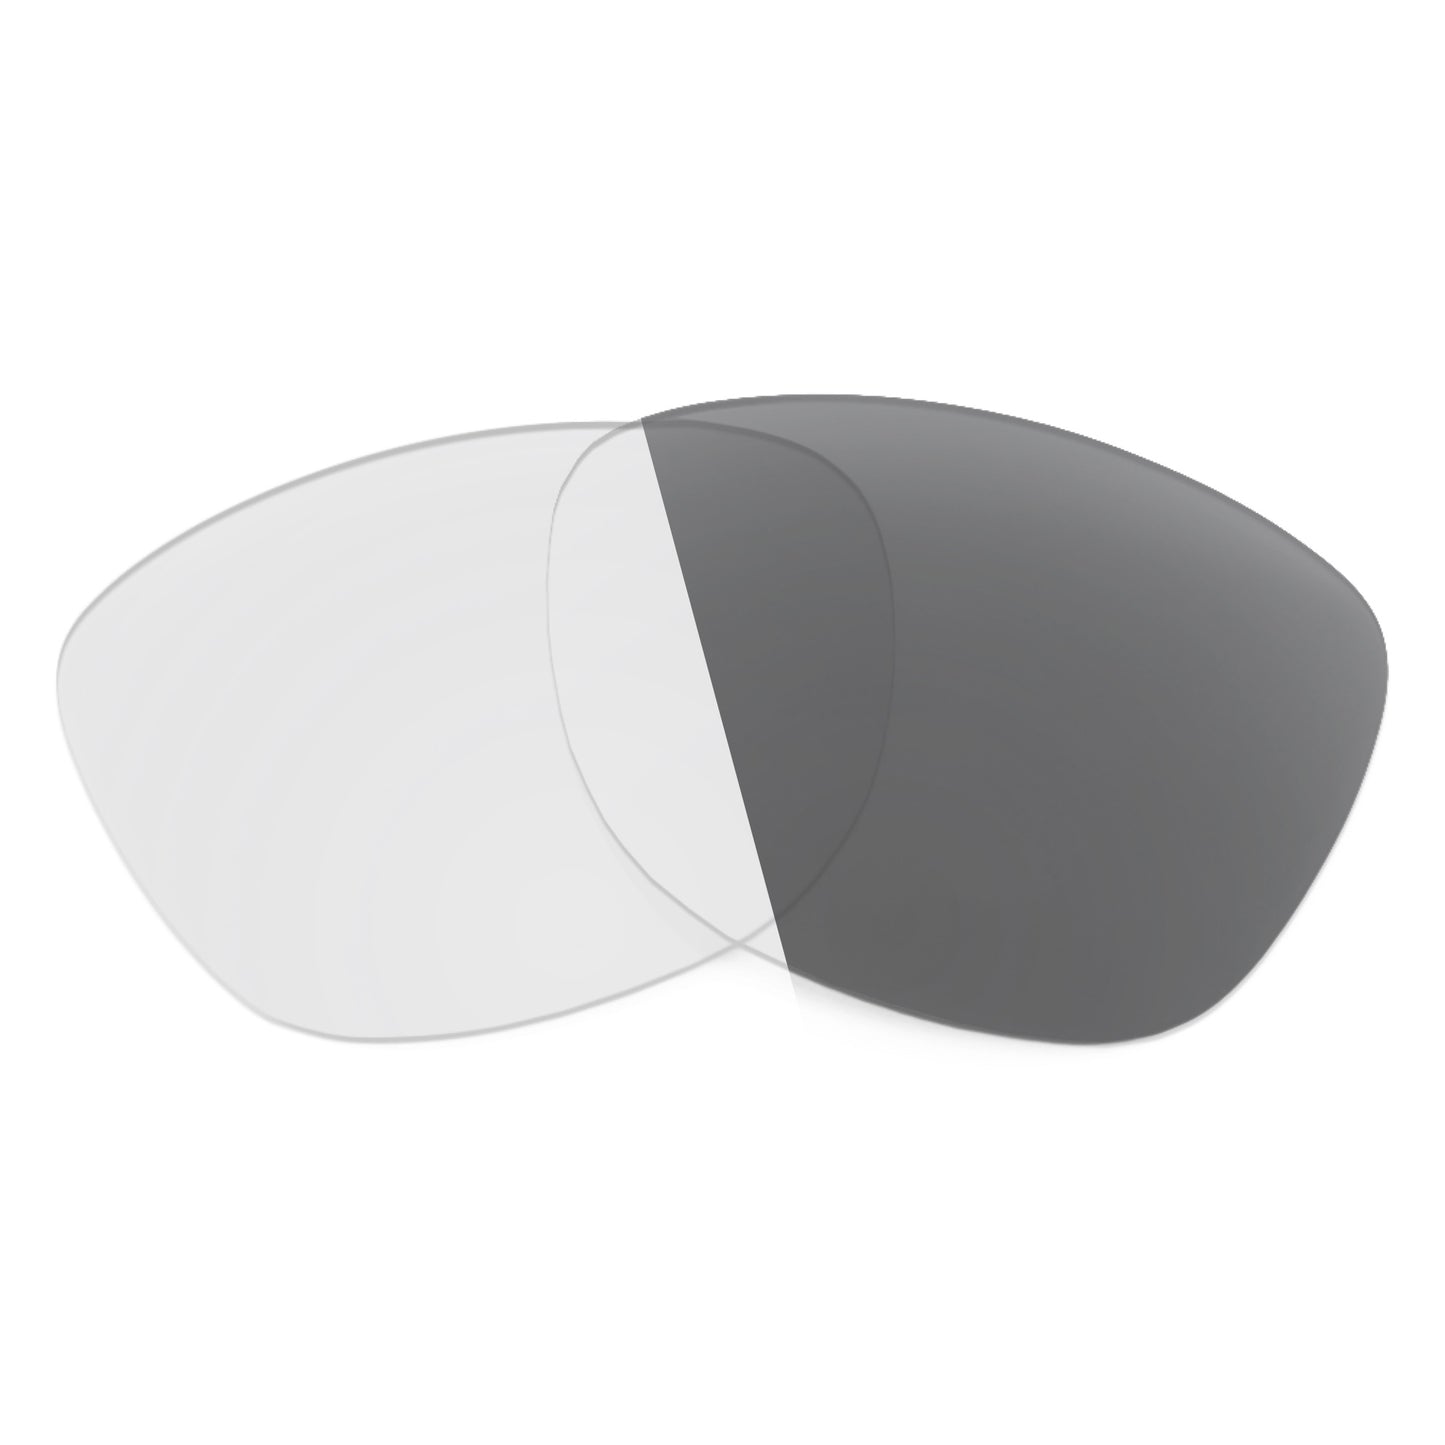 Revant replacement lenses for Ray-Ban Folding Wayfarer RB4105 50mm Non-Polarized Adapt Gray Photochromic